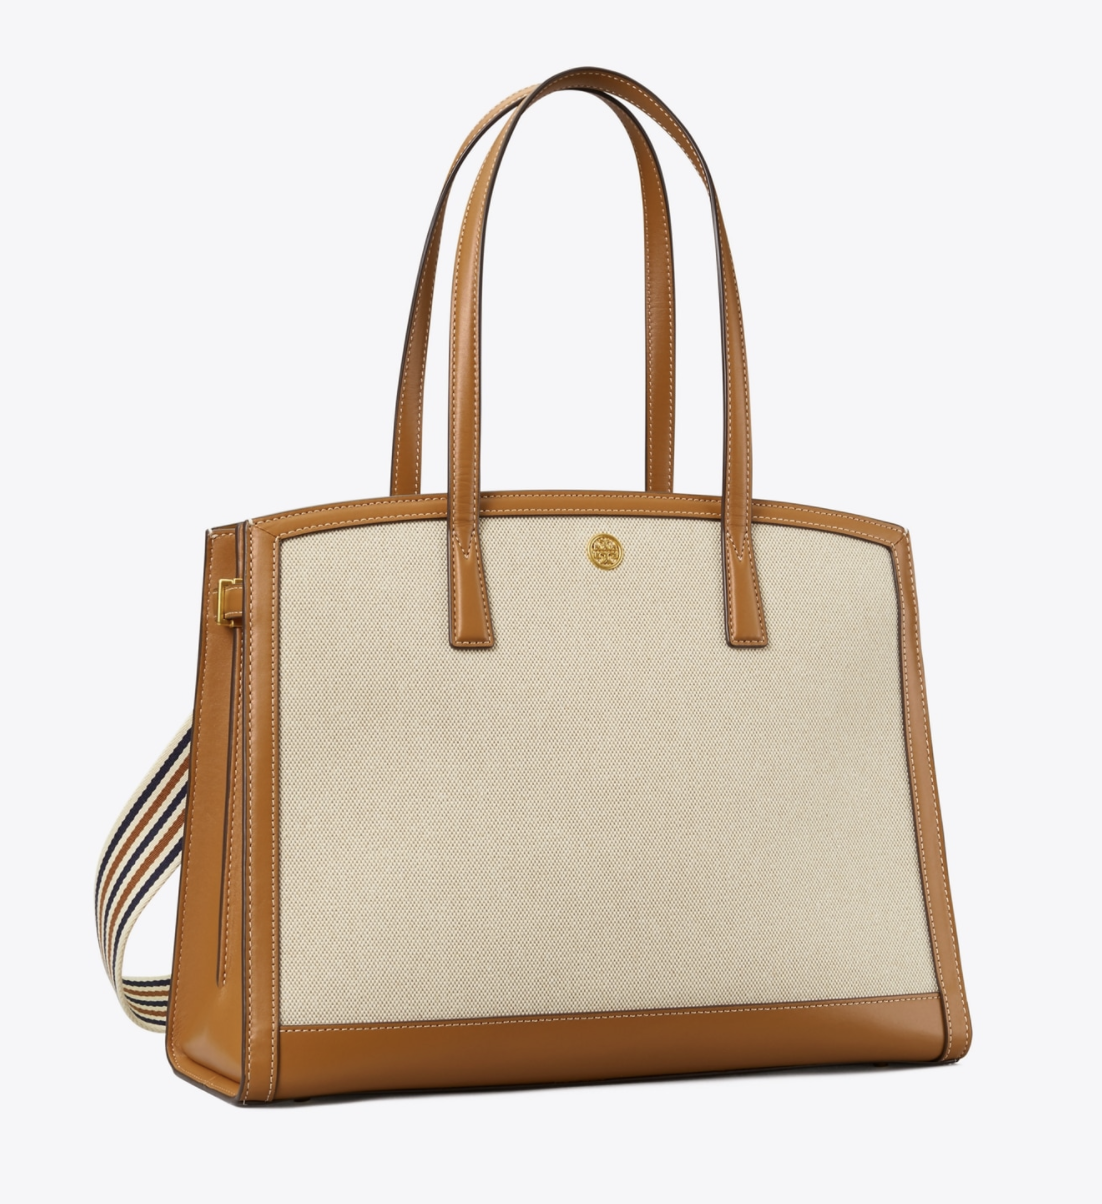 Tory Burch White Bags & Handbags for Women for sale | eBay